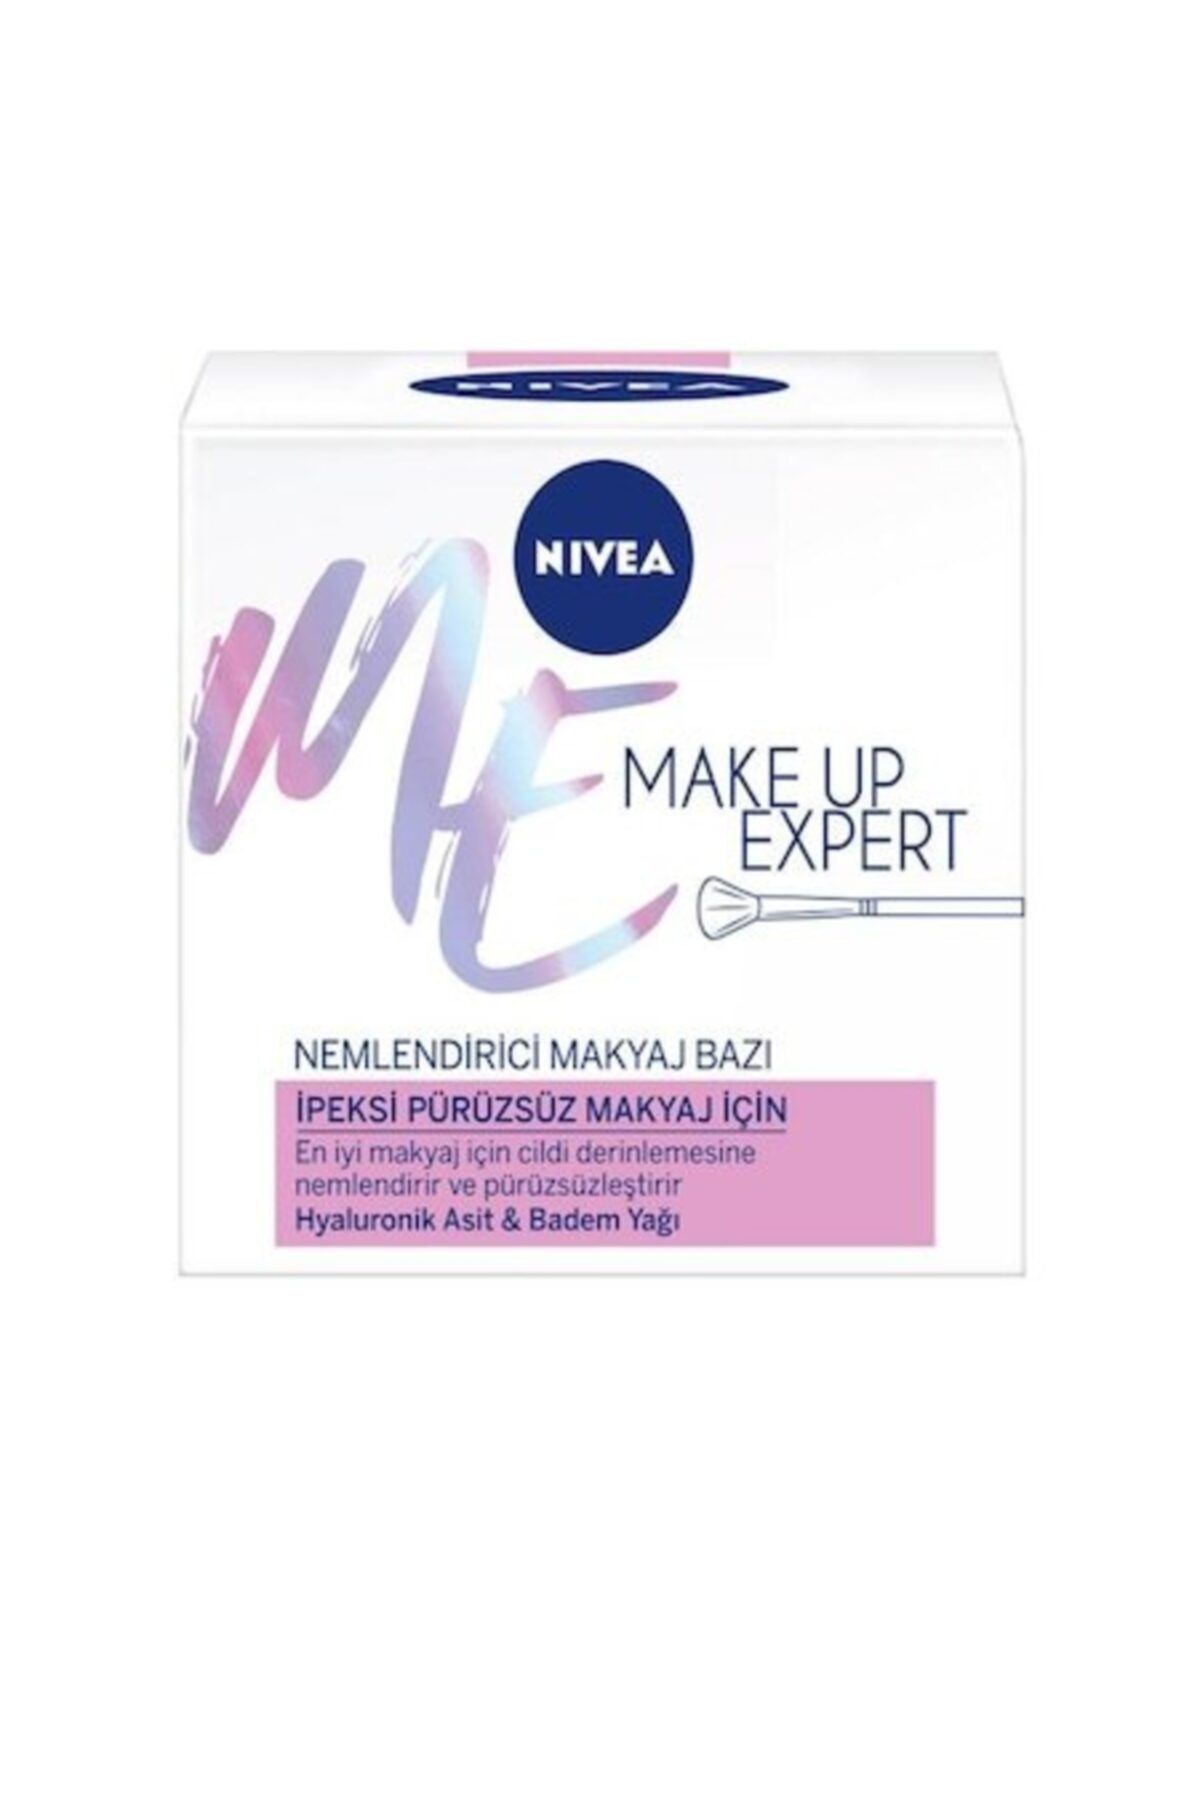 NIVEA Vısage Make Up Expert Nemlendirici Makyaj Bazı Puruzsuz 50ml